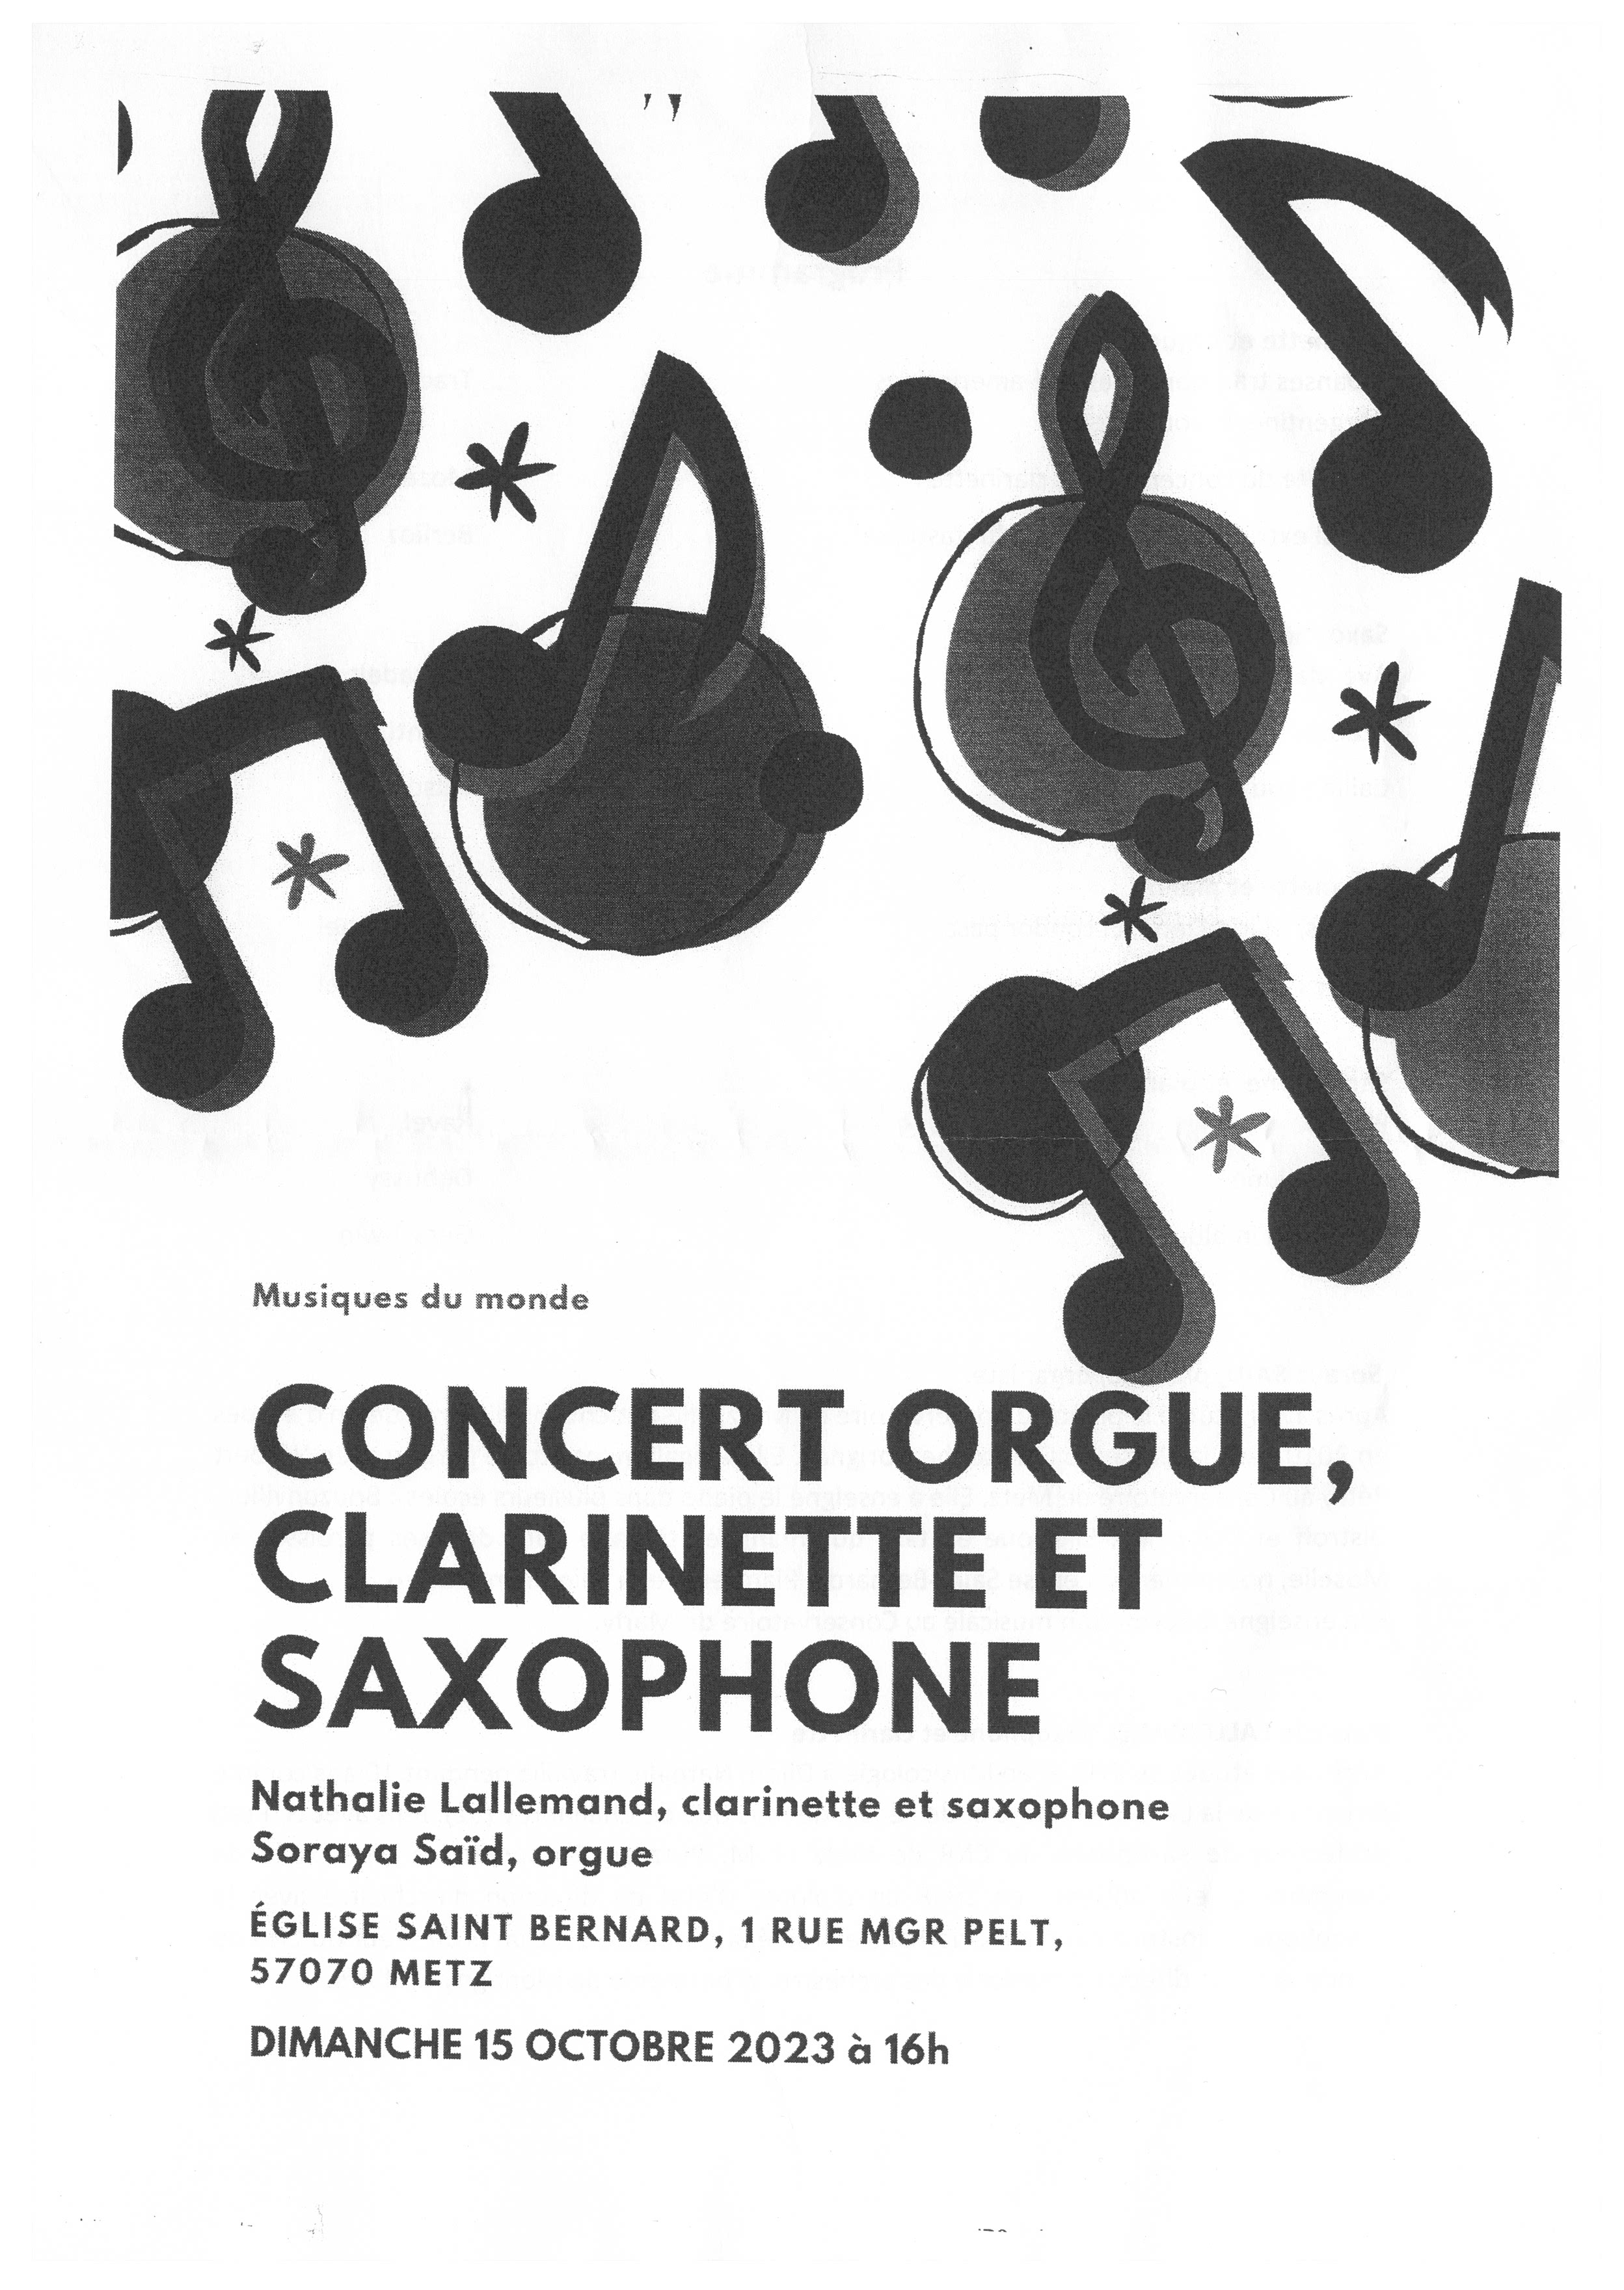 Concert - Organ, clarinet and saxophone